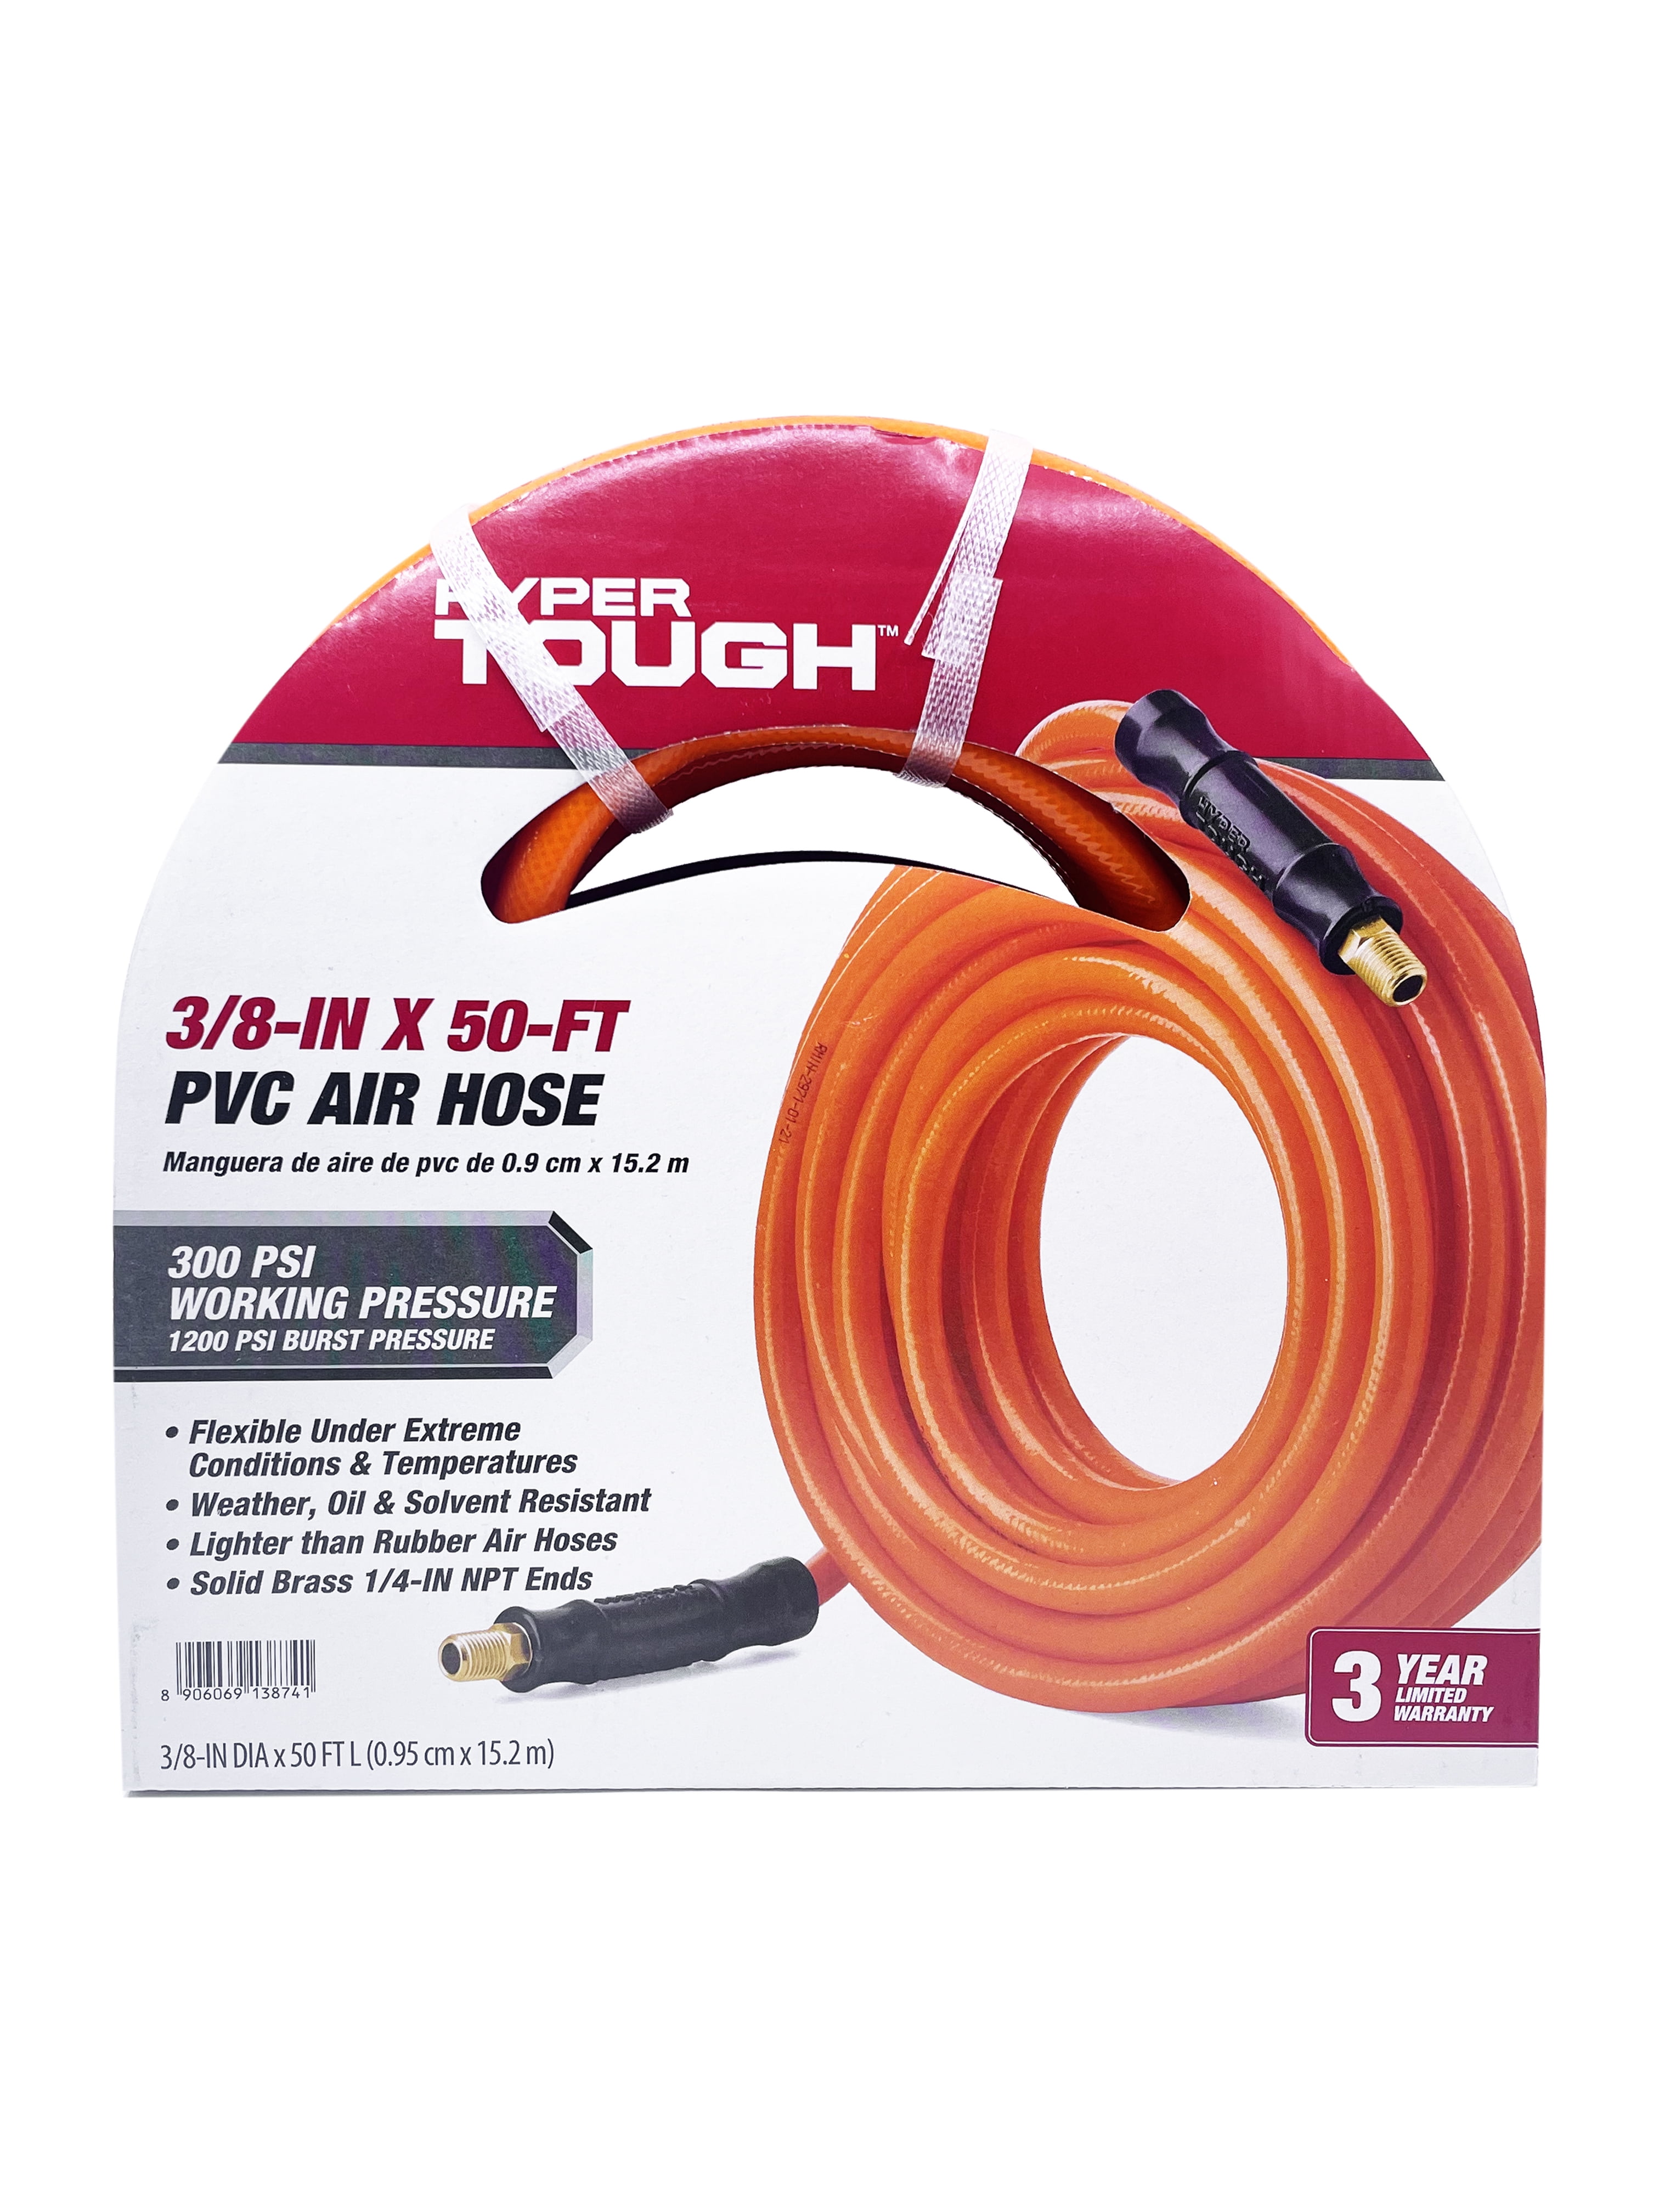 Hyper Tough PVC3850 3/8 x 50' Light Weight & Flexible PVC Air Hose